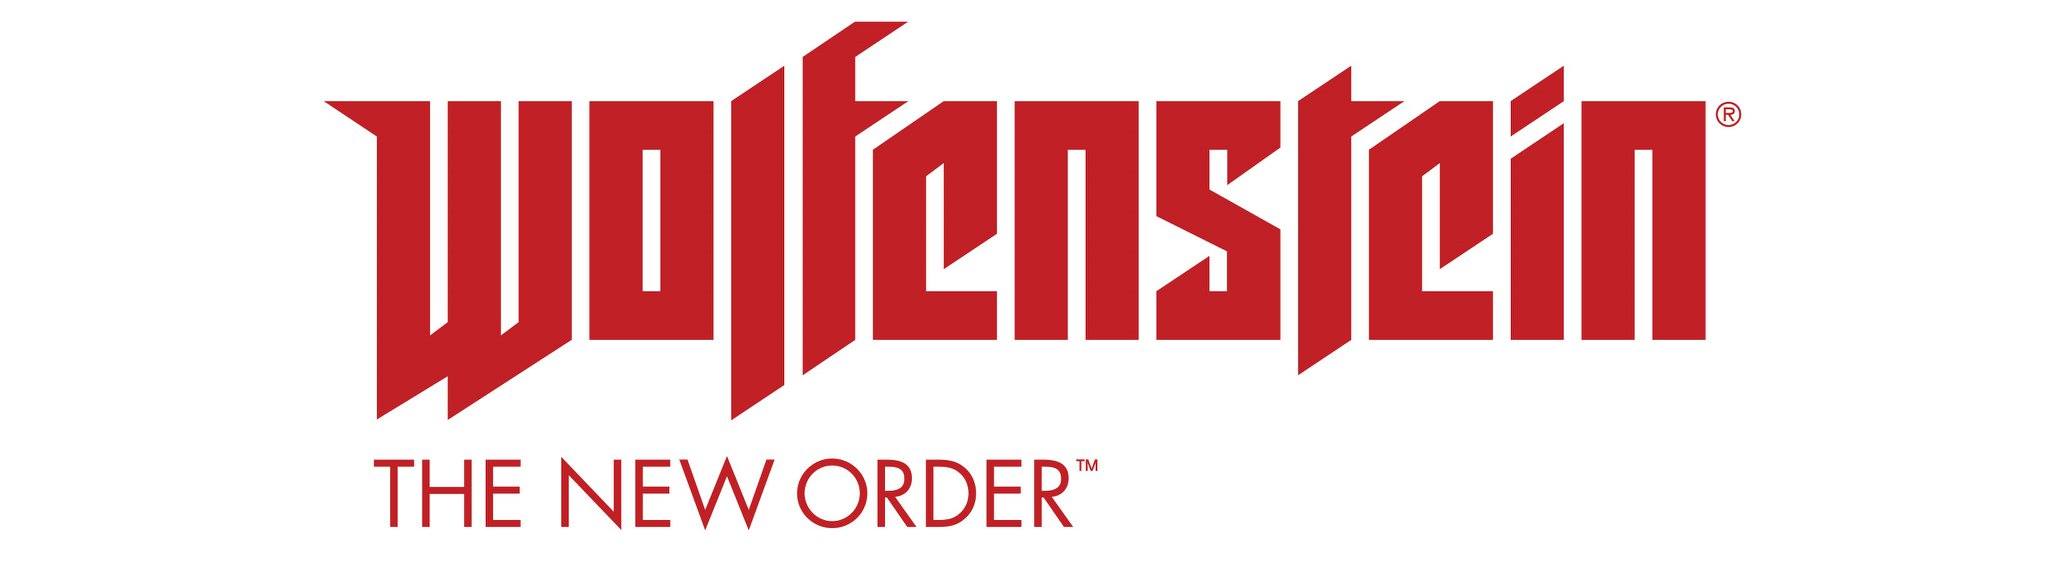  Wolfenstein: The New Order - Playstation 3 : Bethesda Softworks  Inc: Everything Else